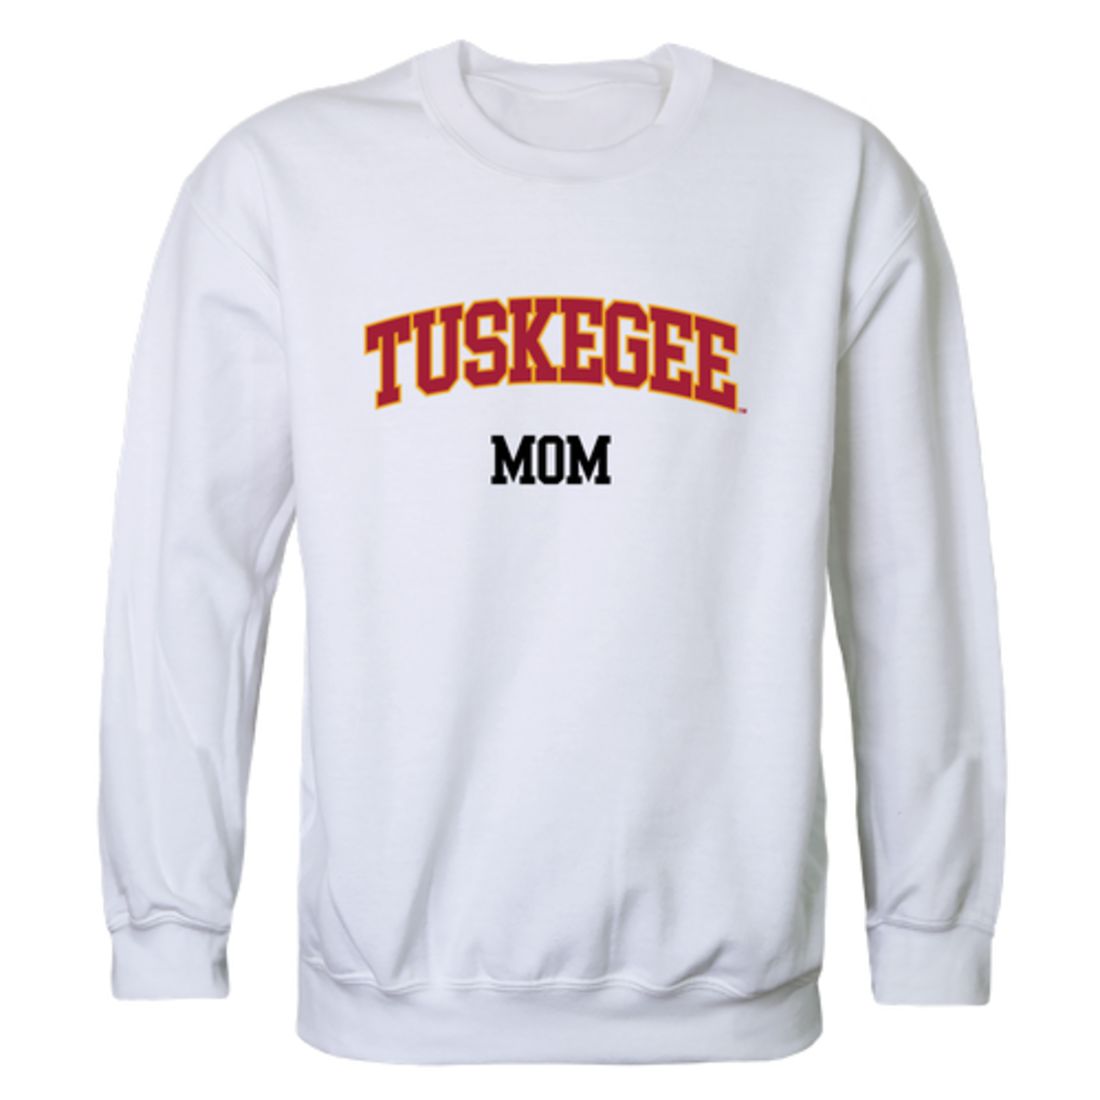 Tuskegee University Golden Tigers Mom Fleece Crewneck Pullover Sweatshirt Heather Charcoal Small-Campus-Wardrobe